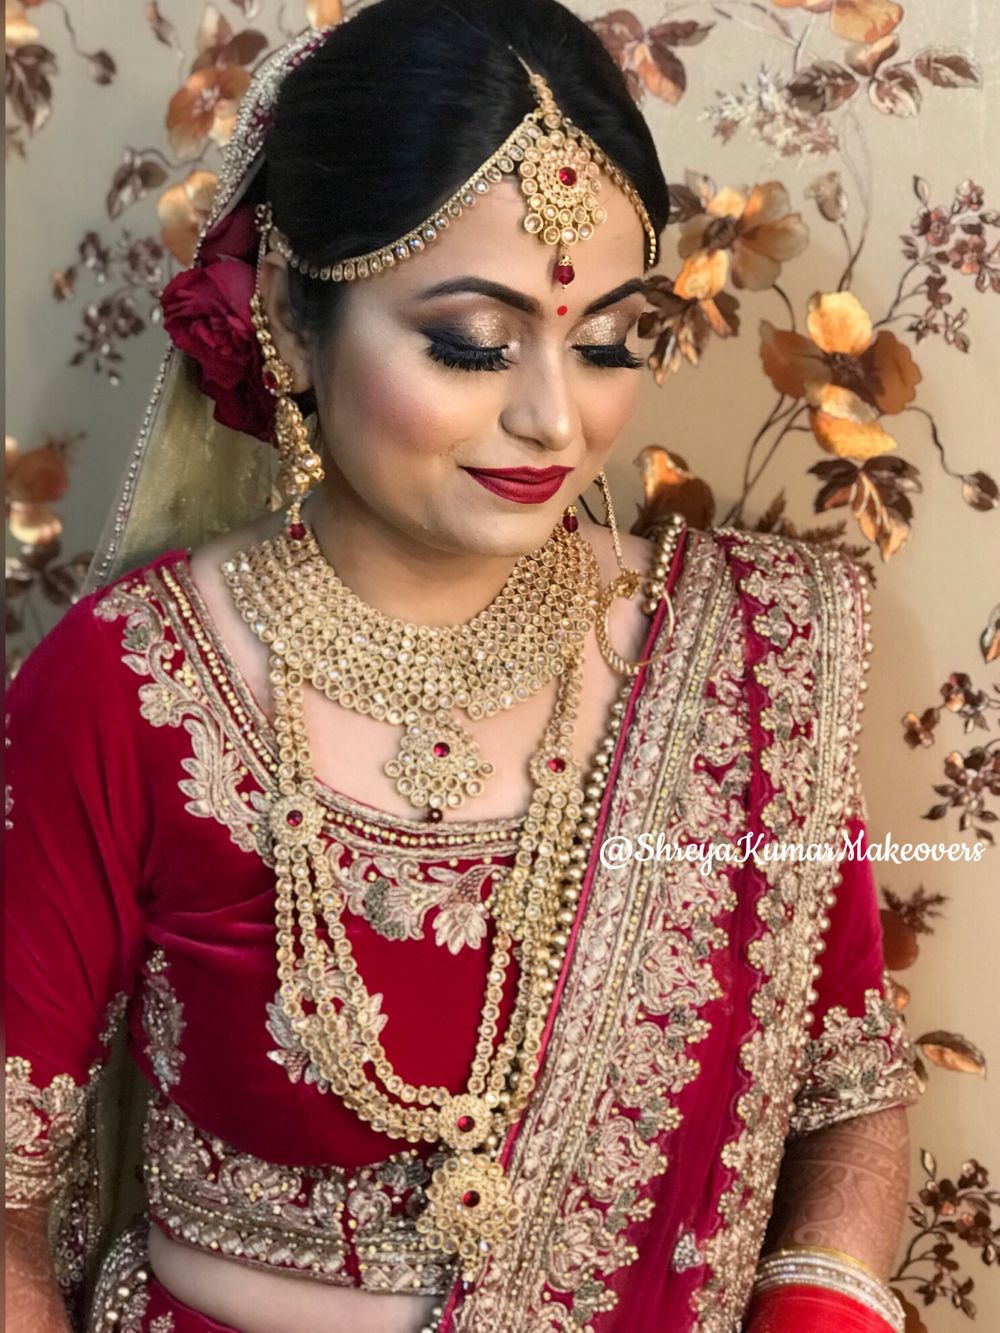 Photo From MAKEUPS 2018 - By Shreya Kumar’s Makeup Studio